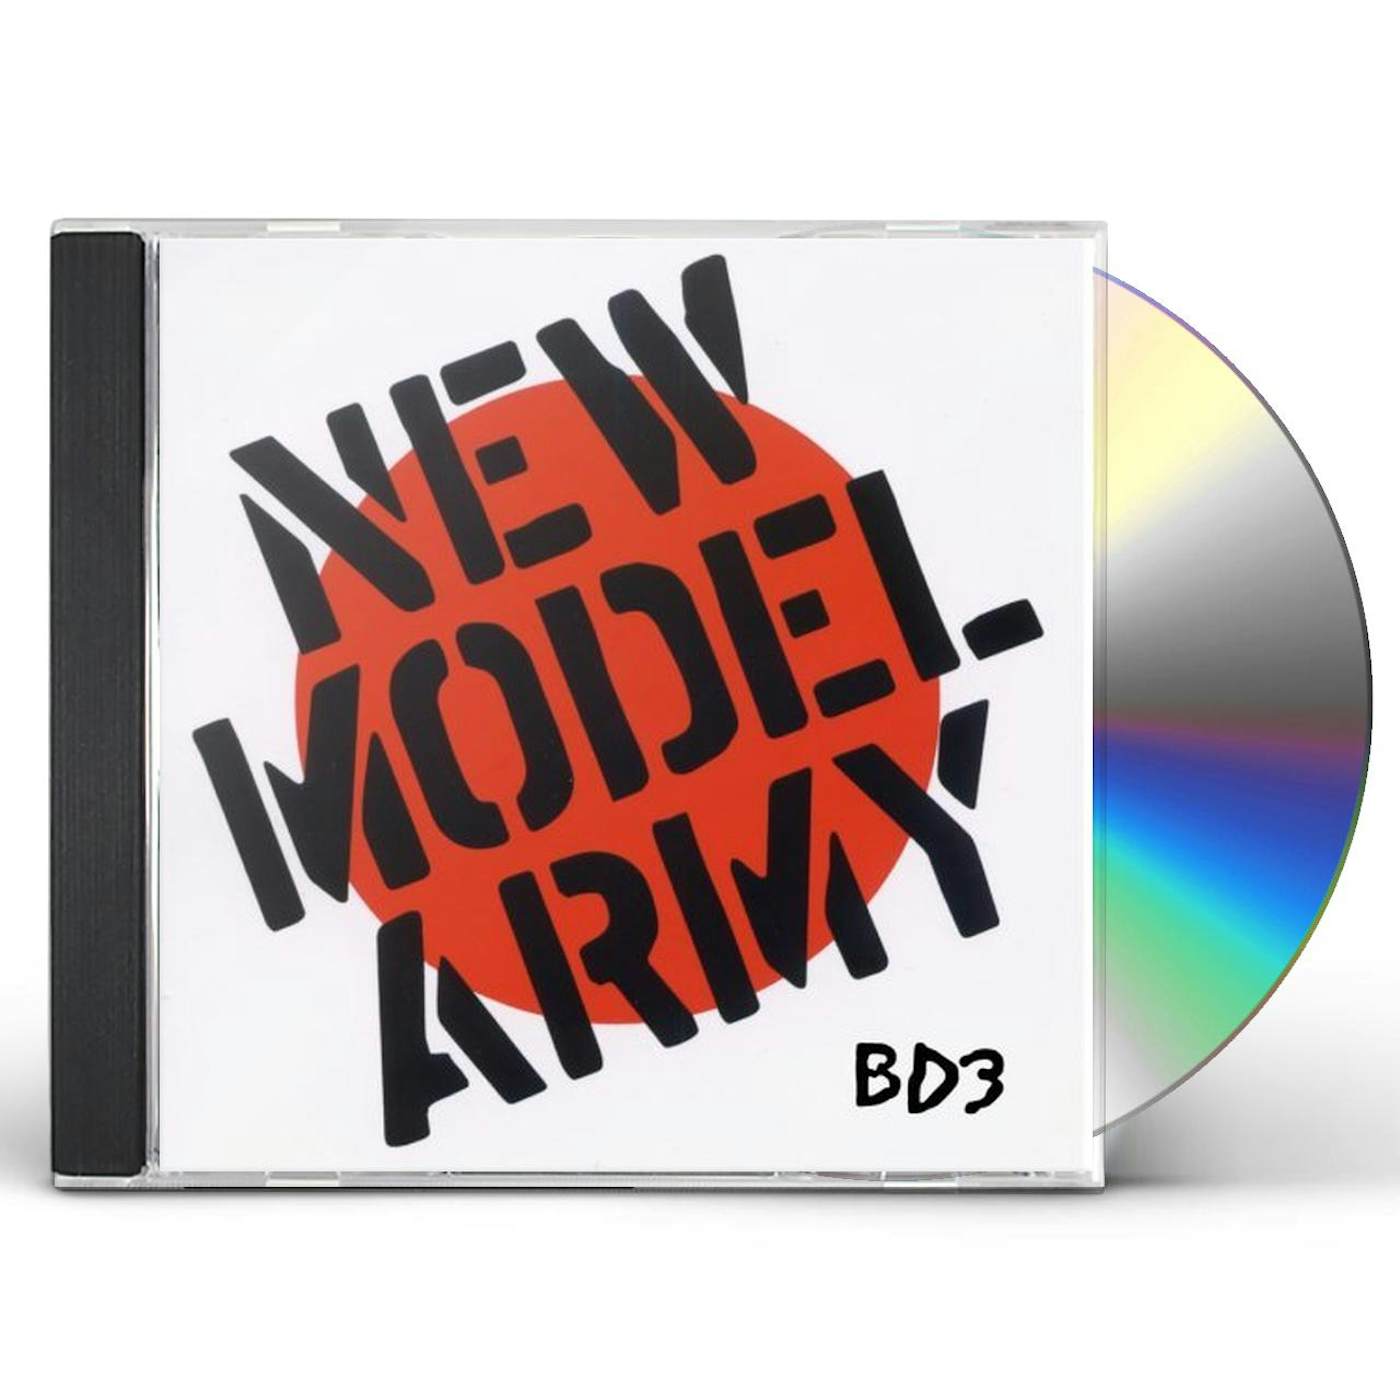 NEW MODEL ARMY CD